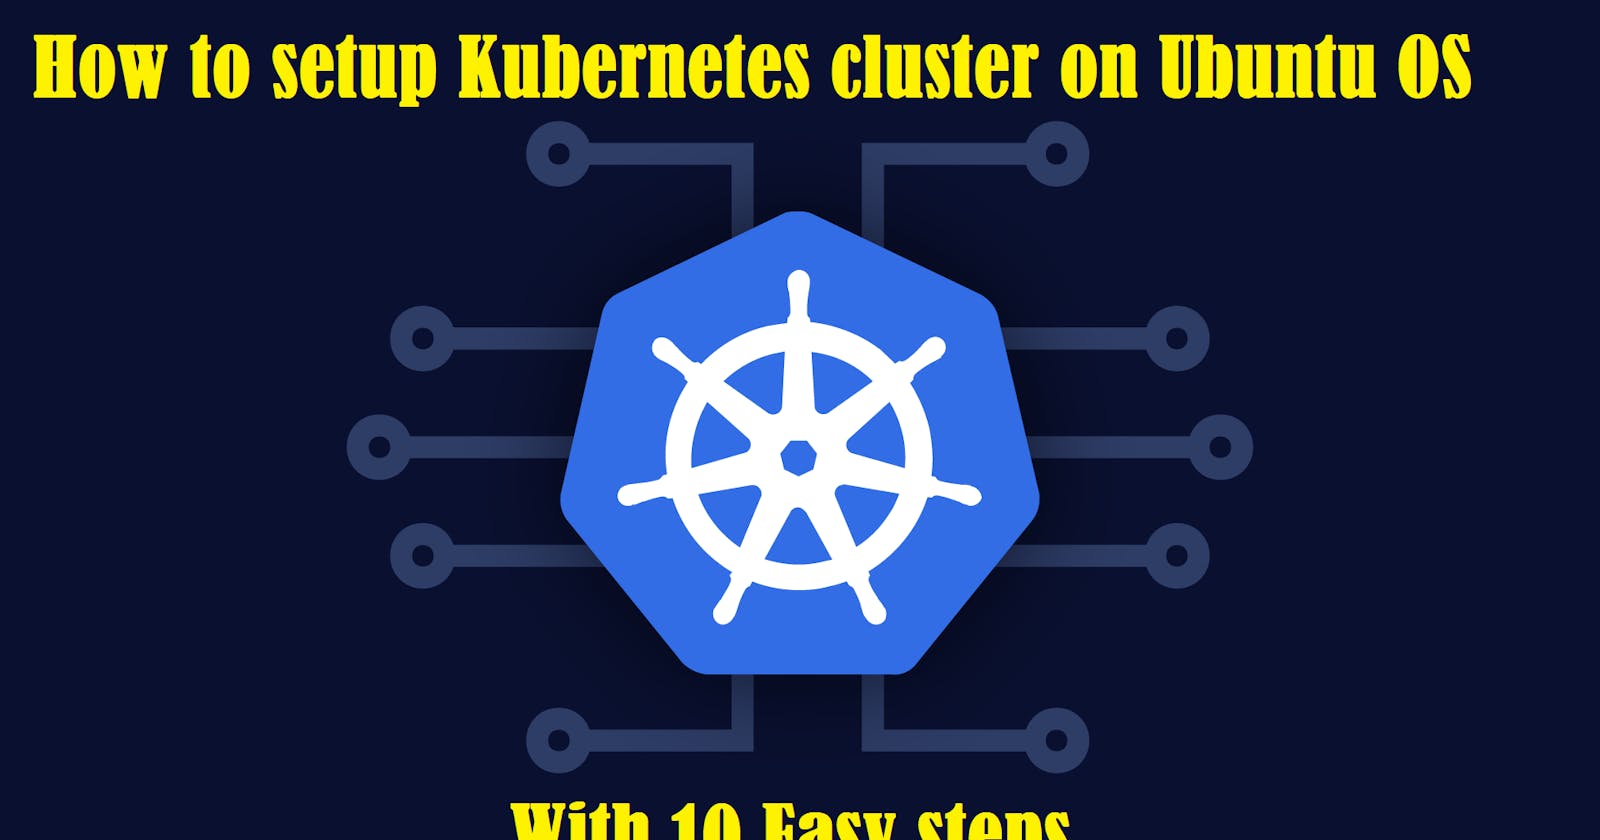 How to setup Kubernetes cluster over cloud on Ubuntu OS